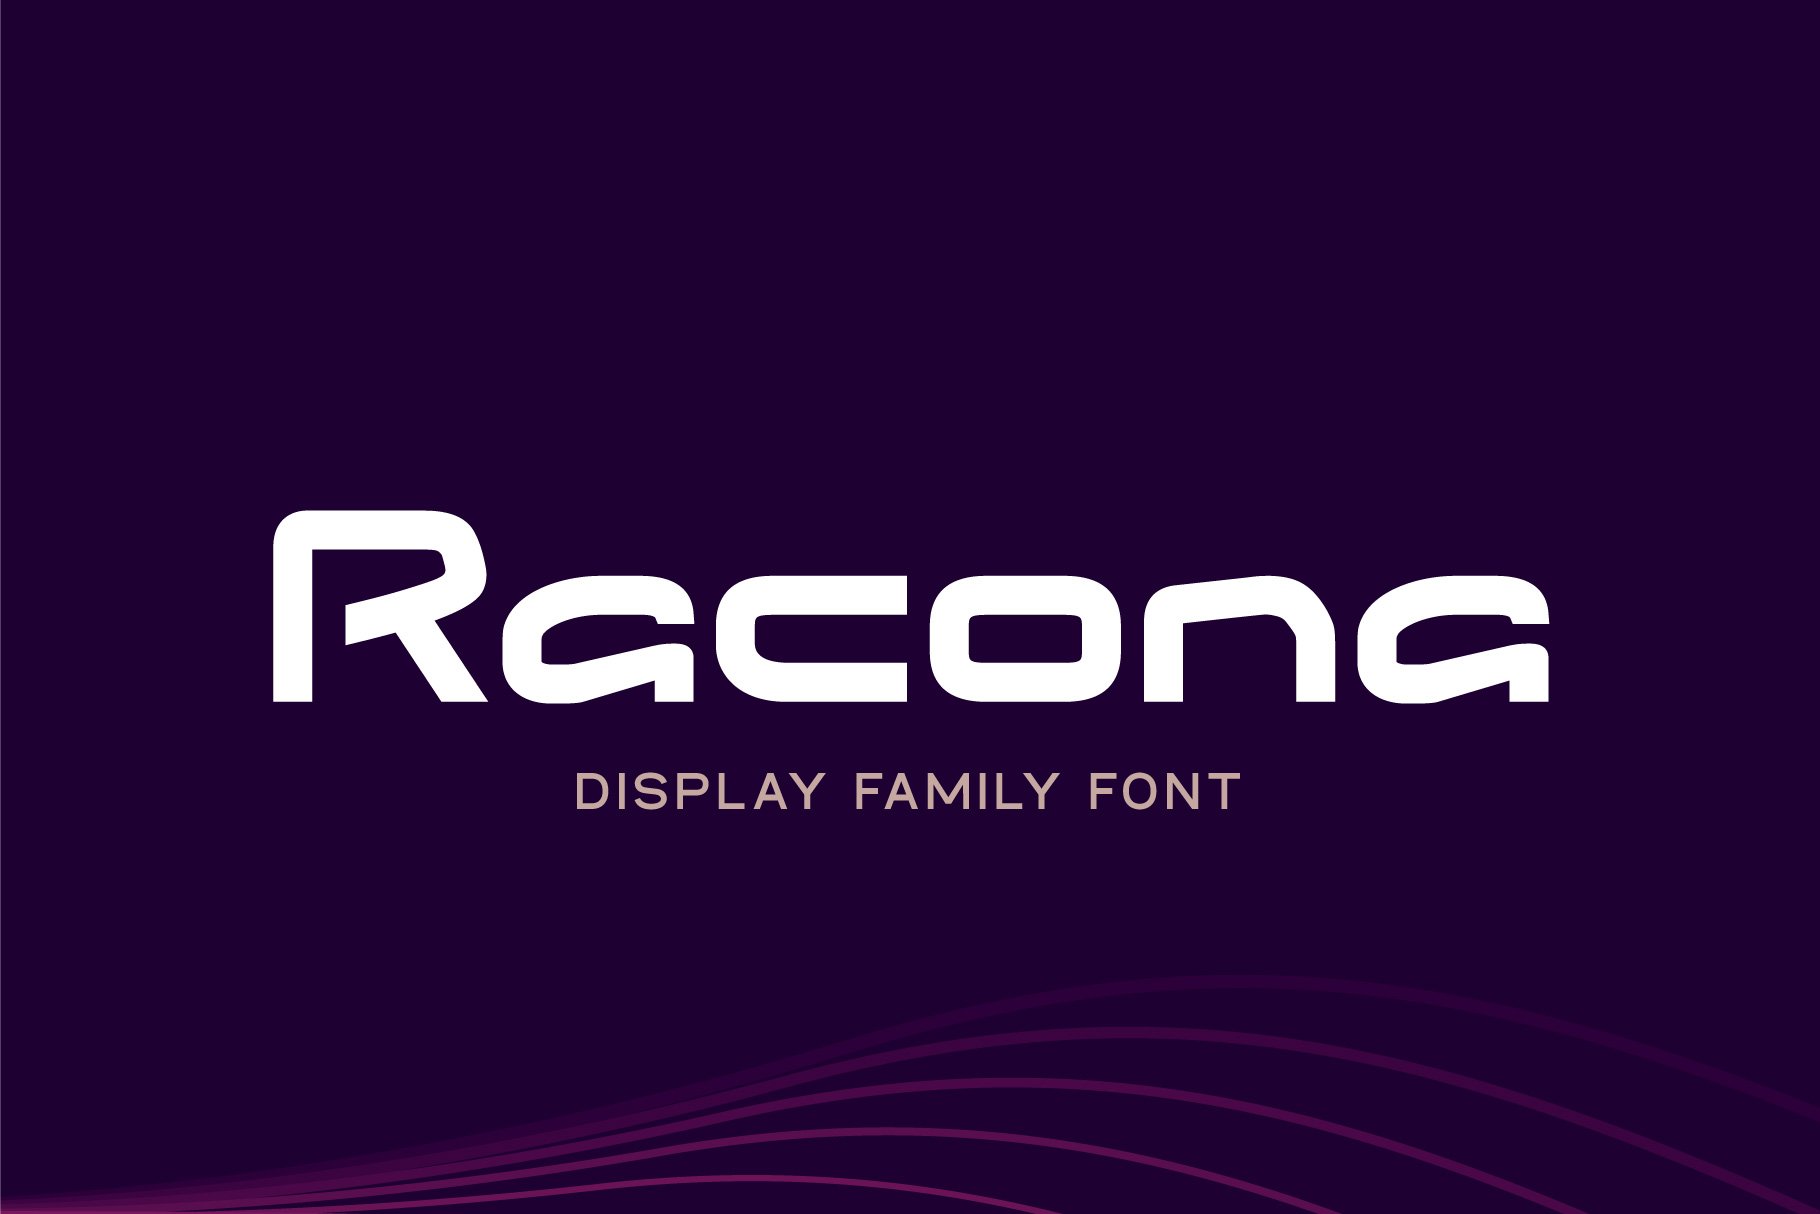 Racona cover image.